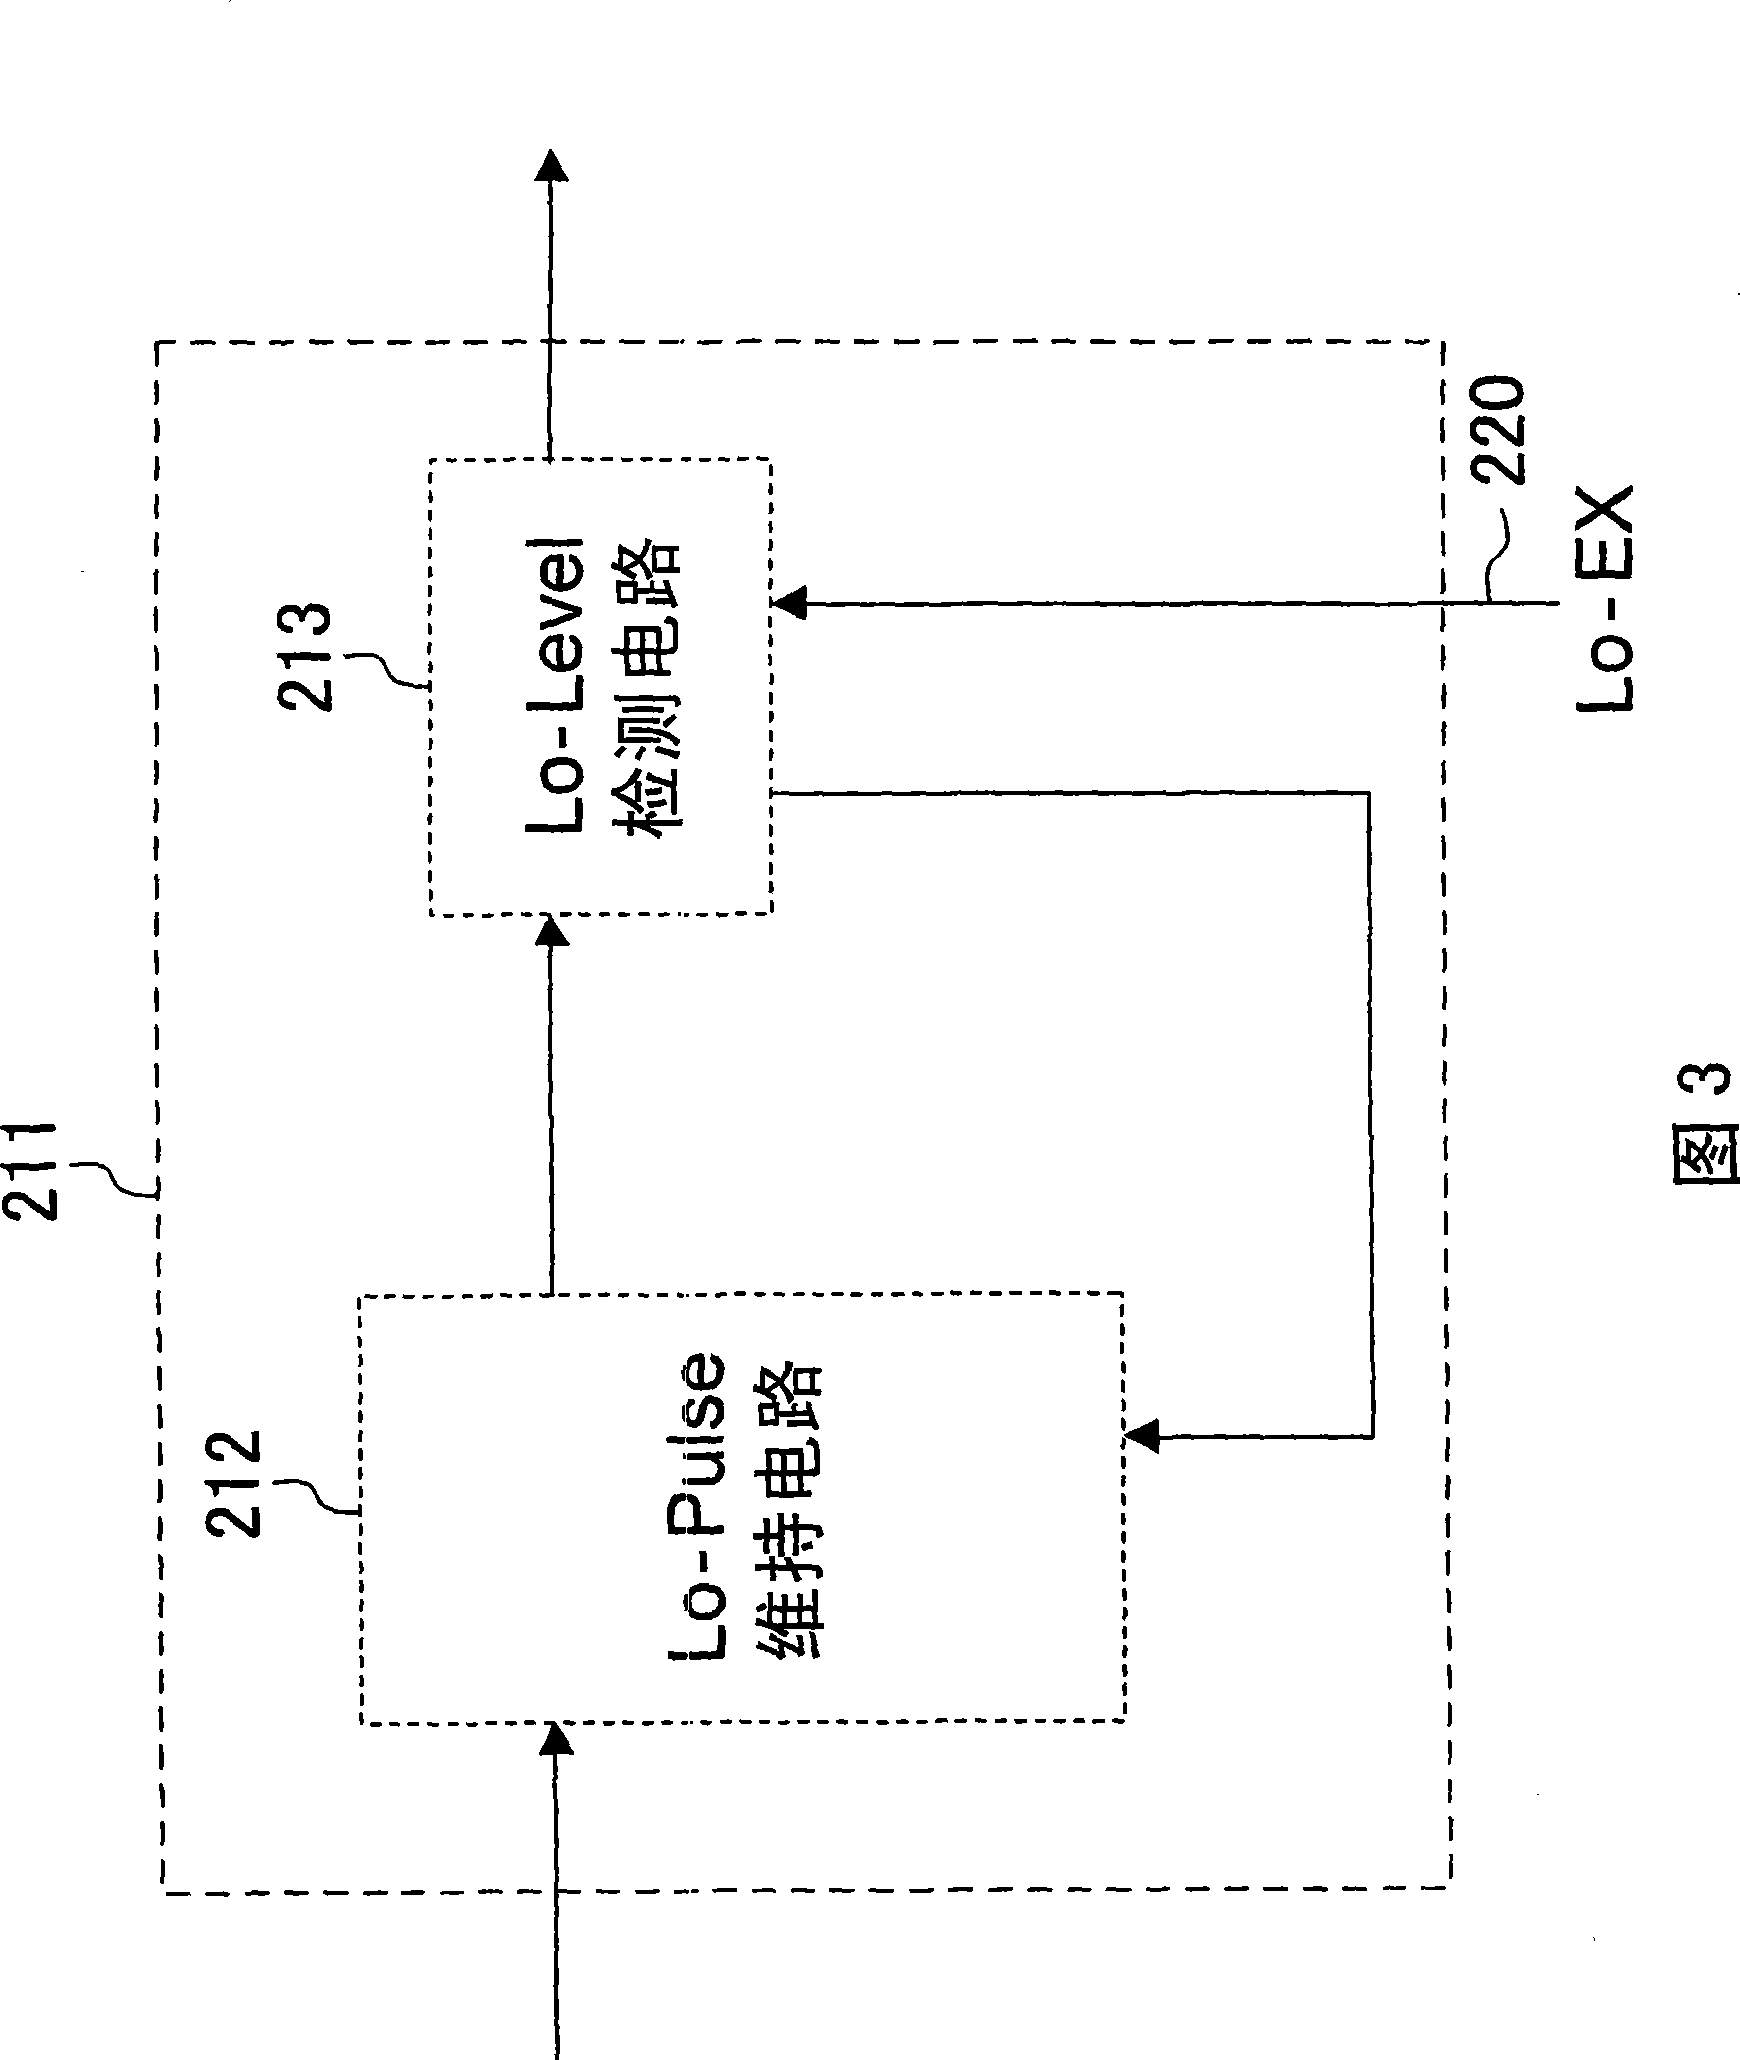 Capacitive load driving circuit and plasma display panel